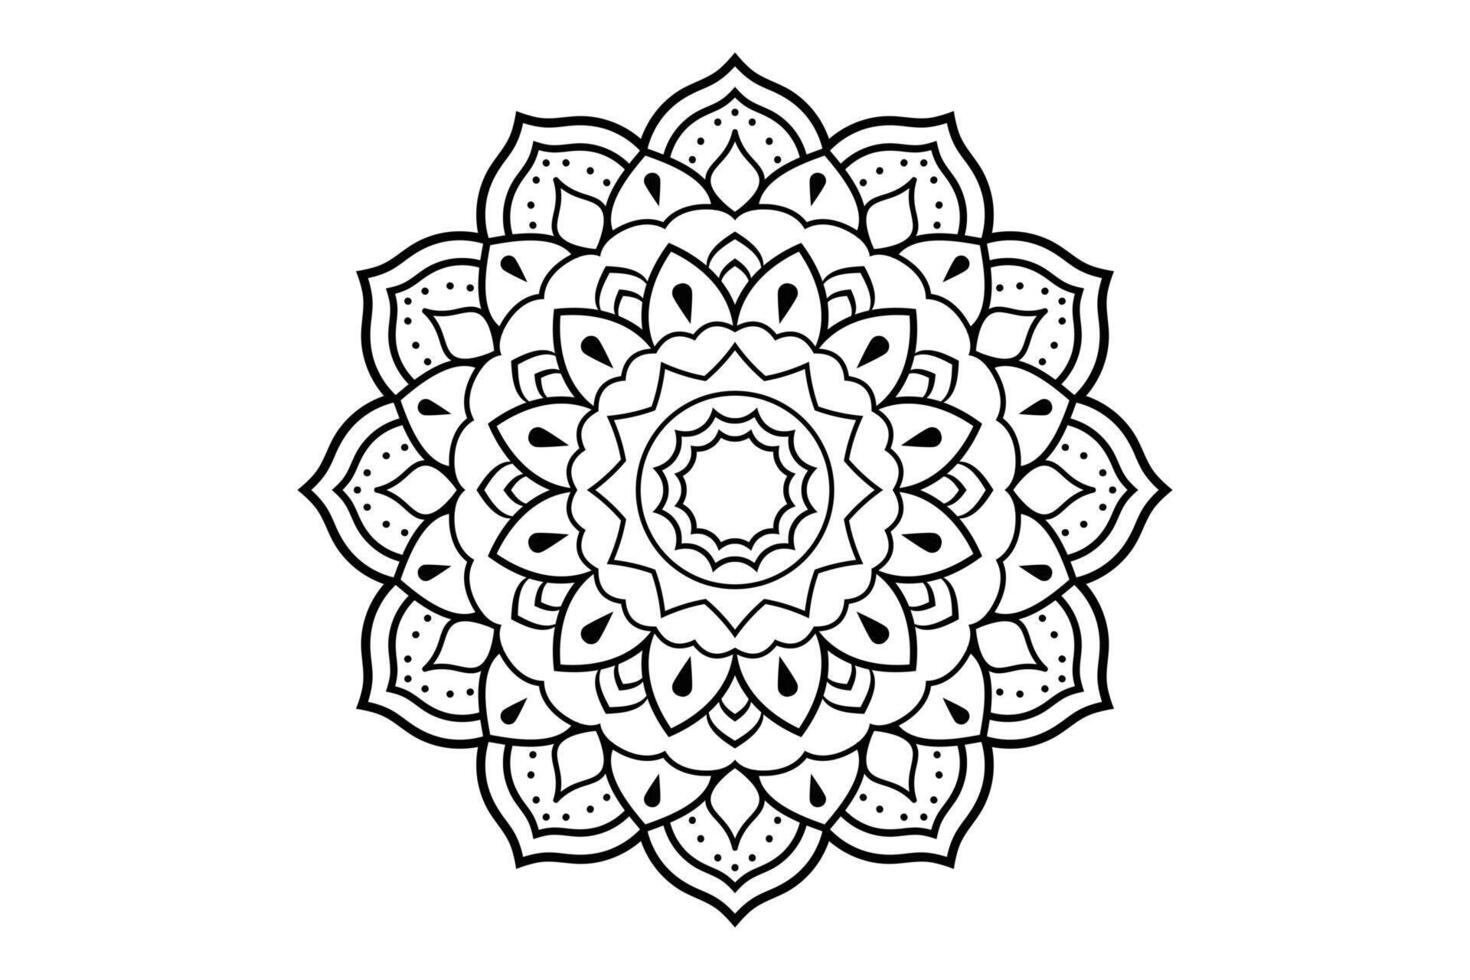 Mandala design, Floral circular mandala design, black and white background with mandala design vector